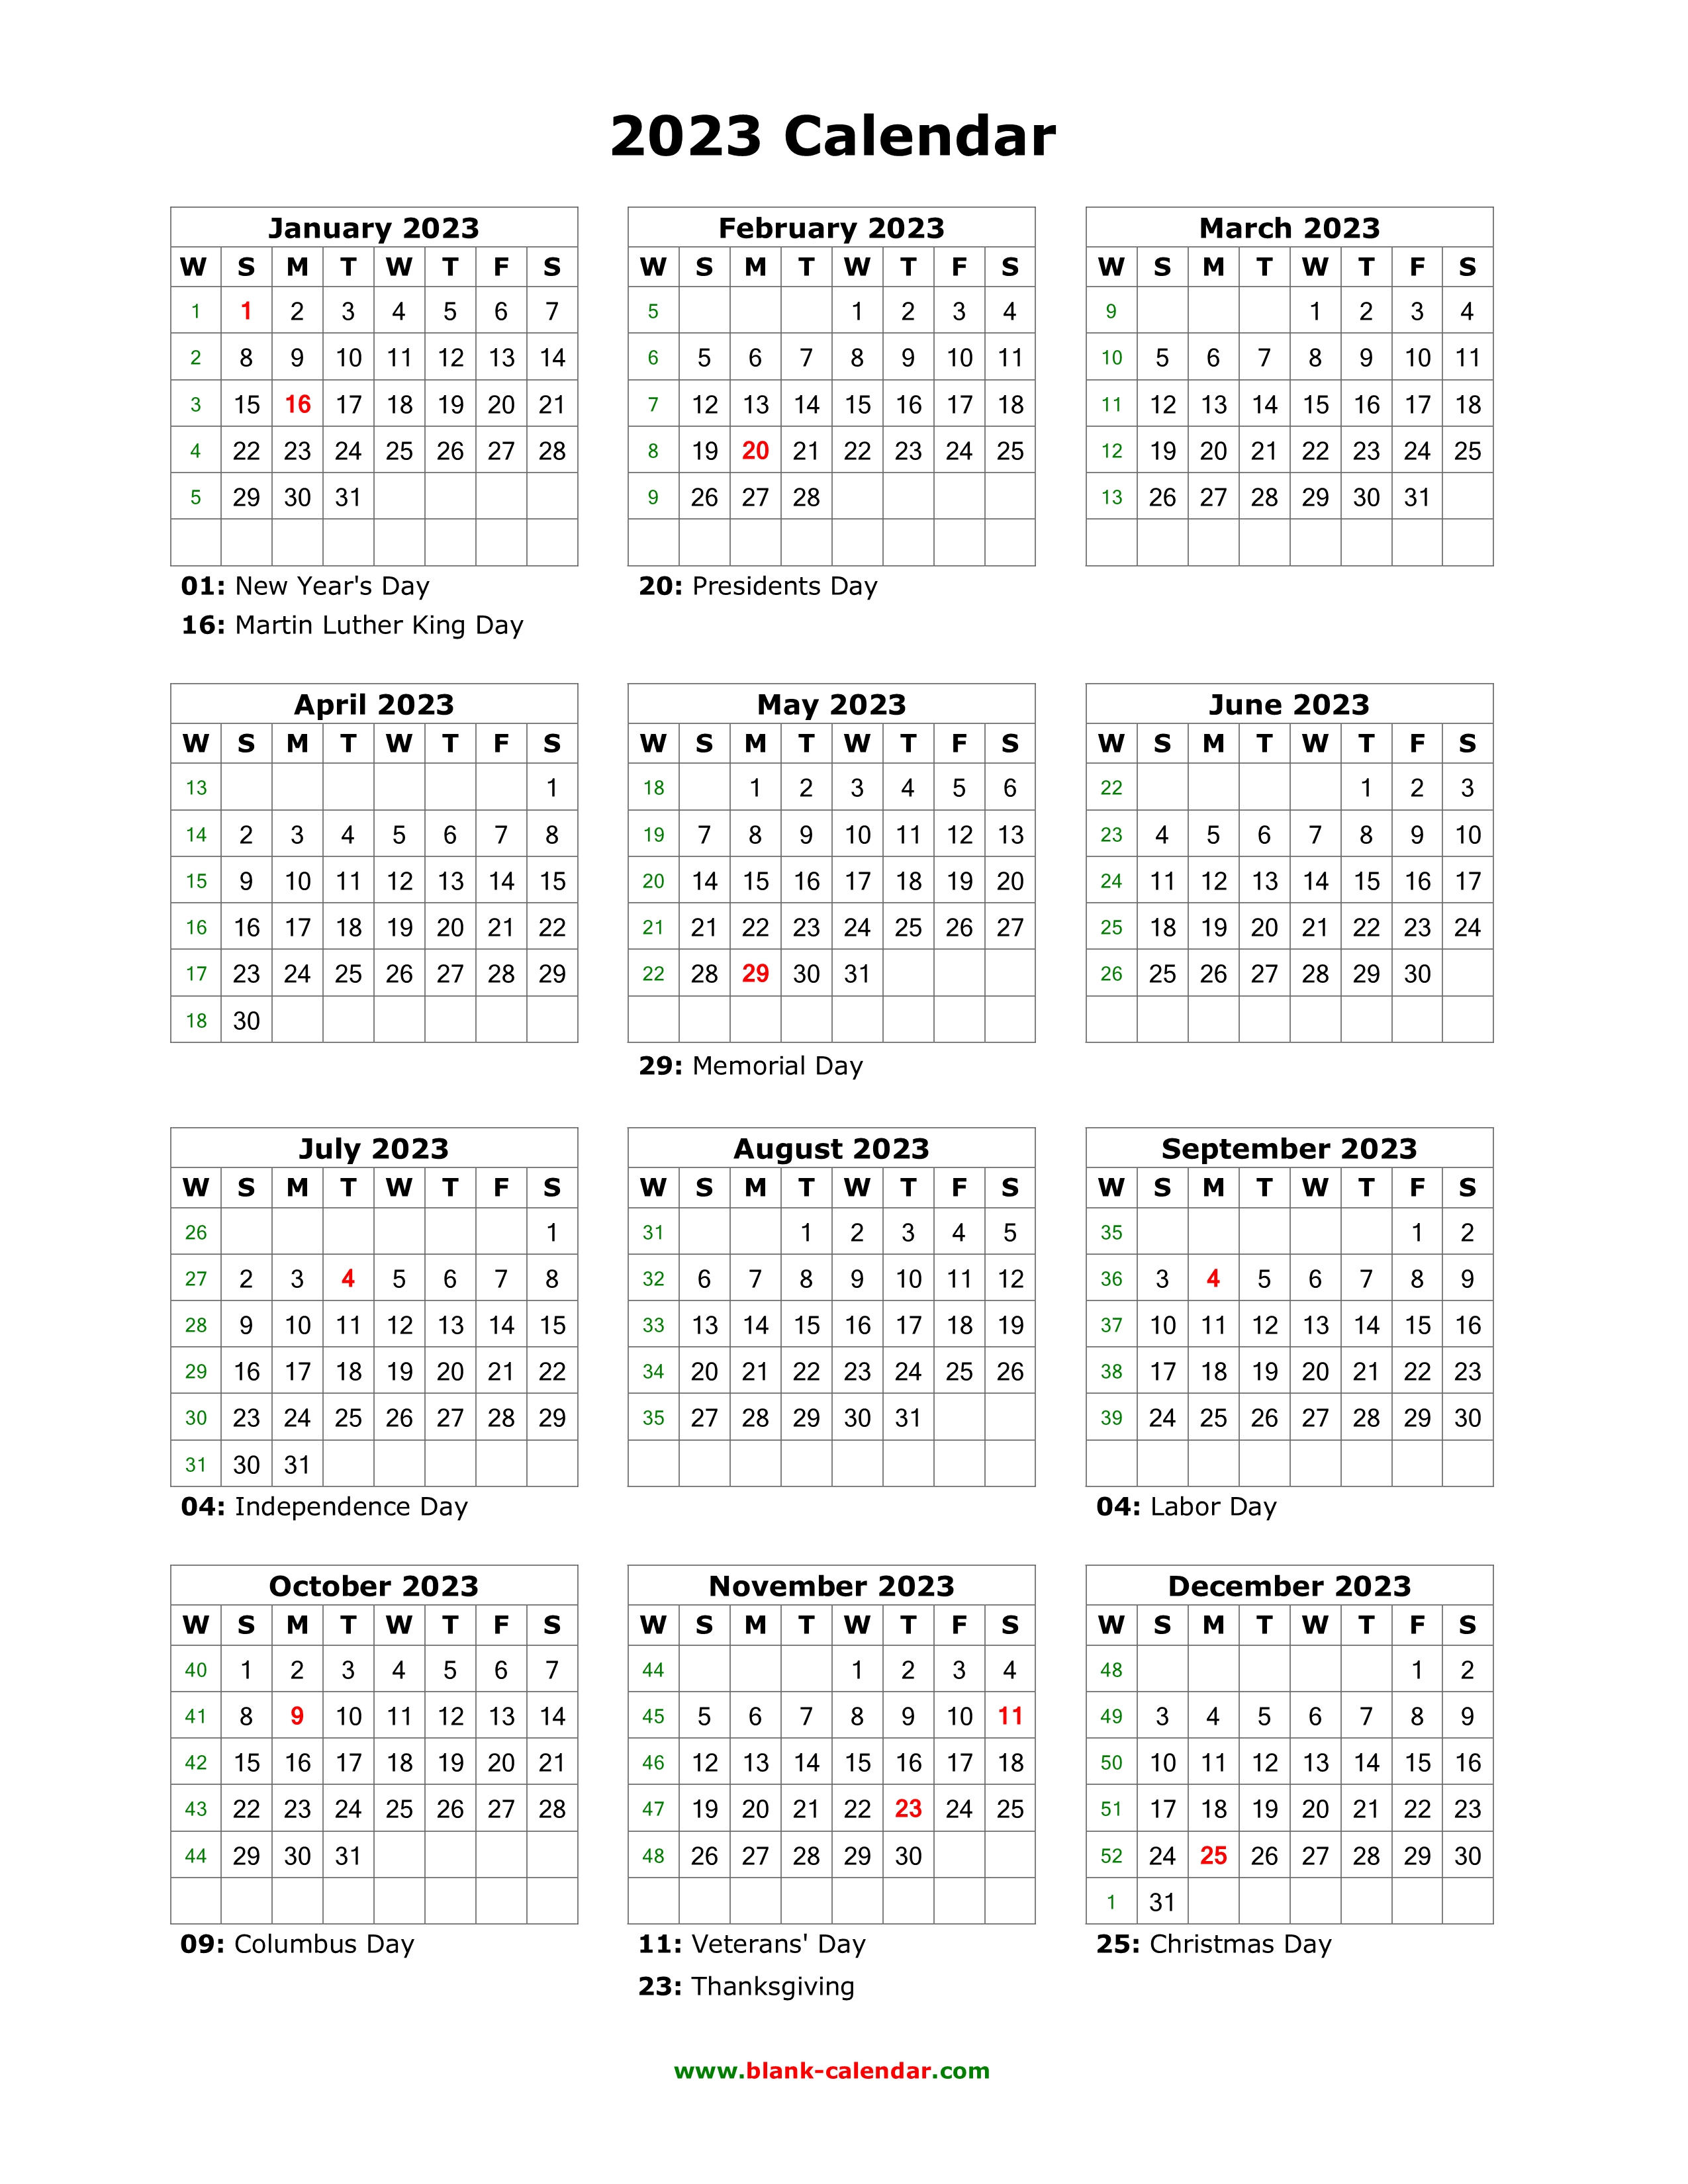 2023 Calendar With Holidays Template